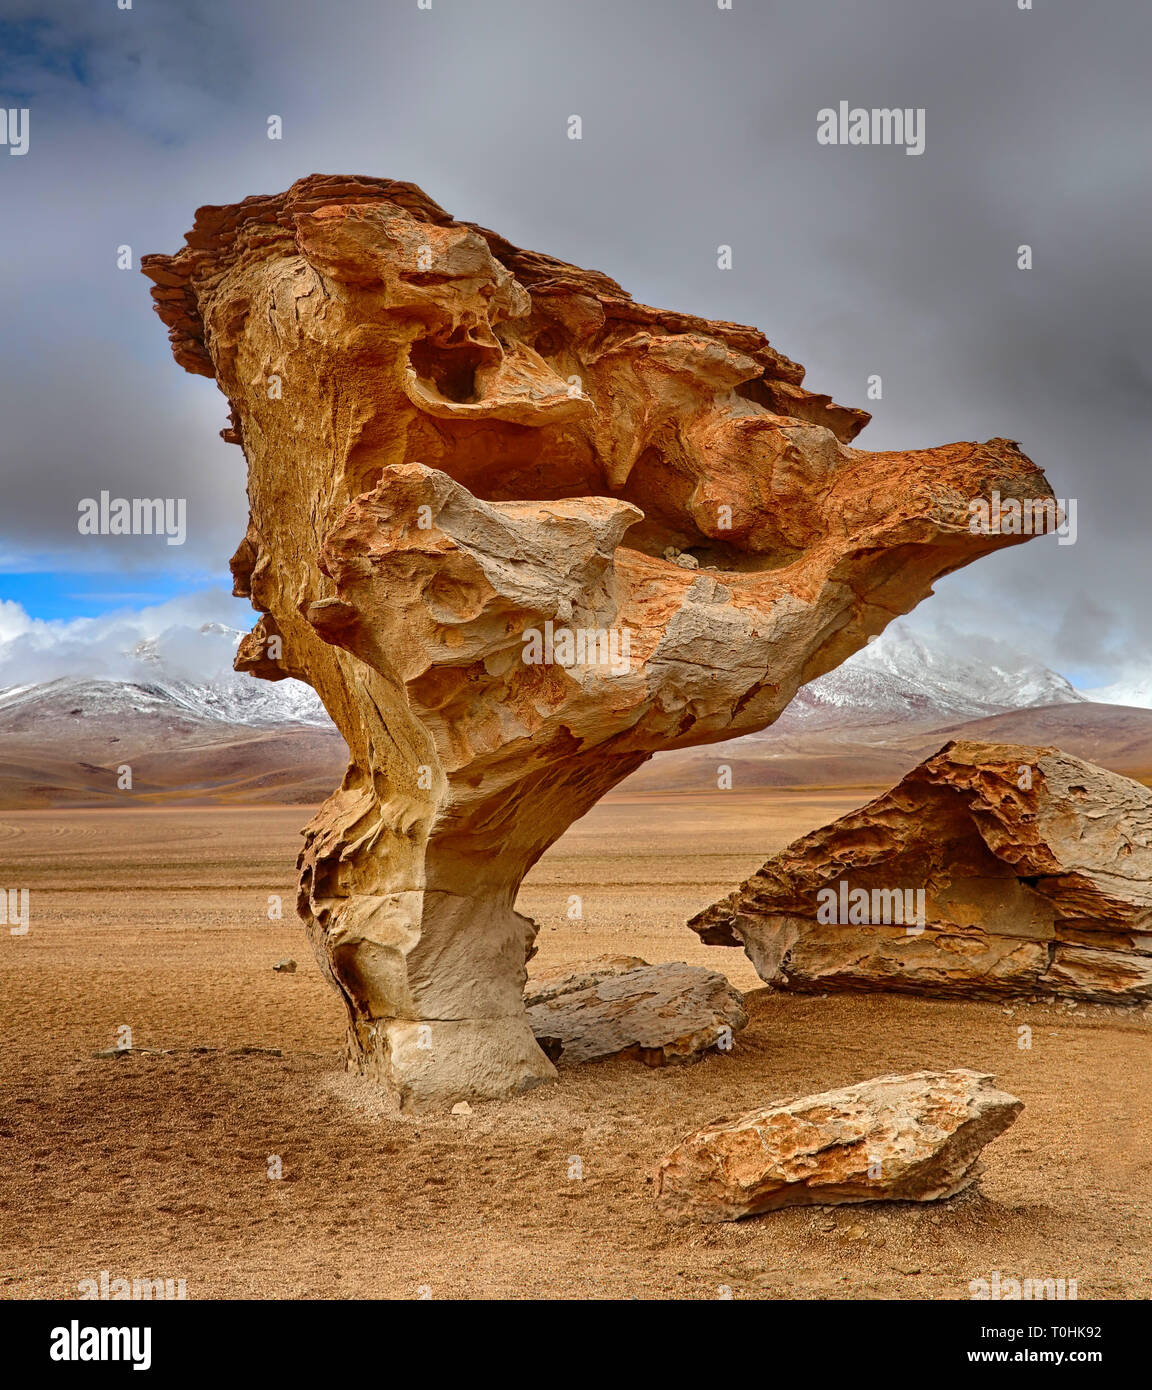 Arbol de Piedra, Siloli desert (bolivia) - HDR image Stock Photo